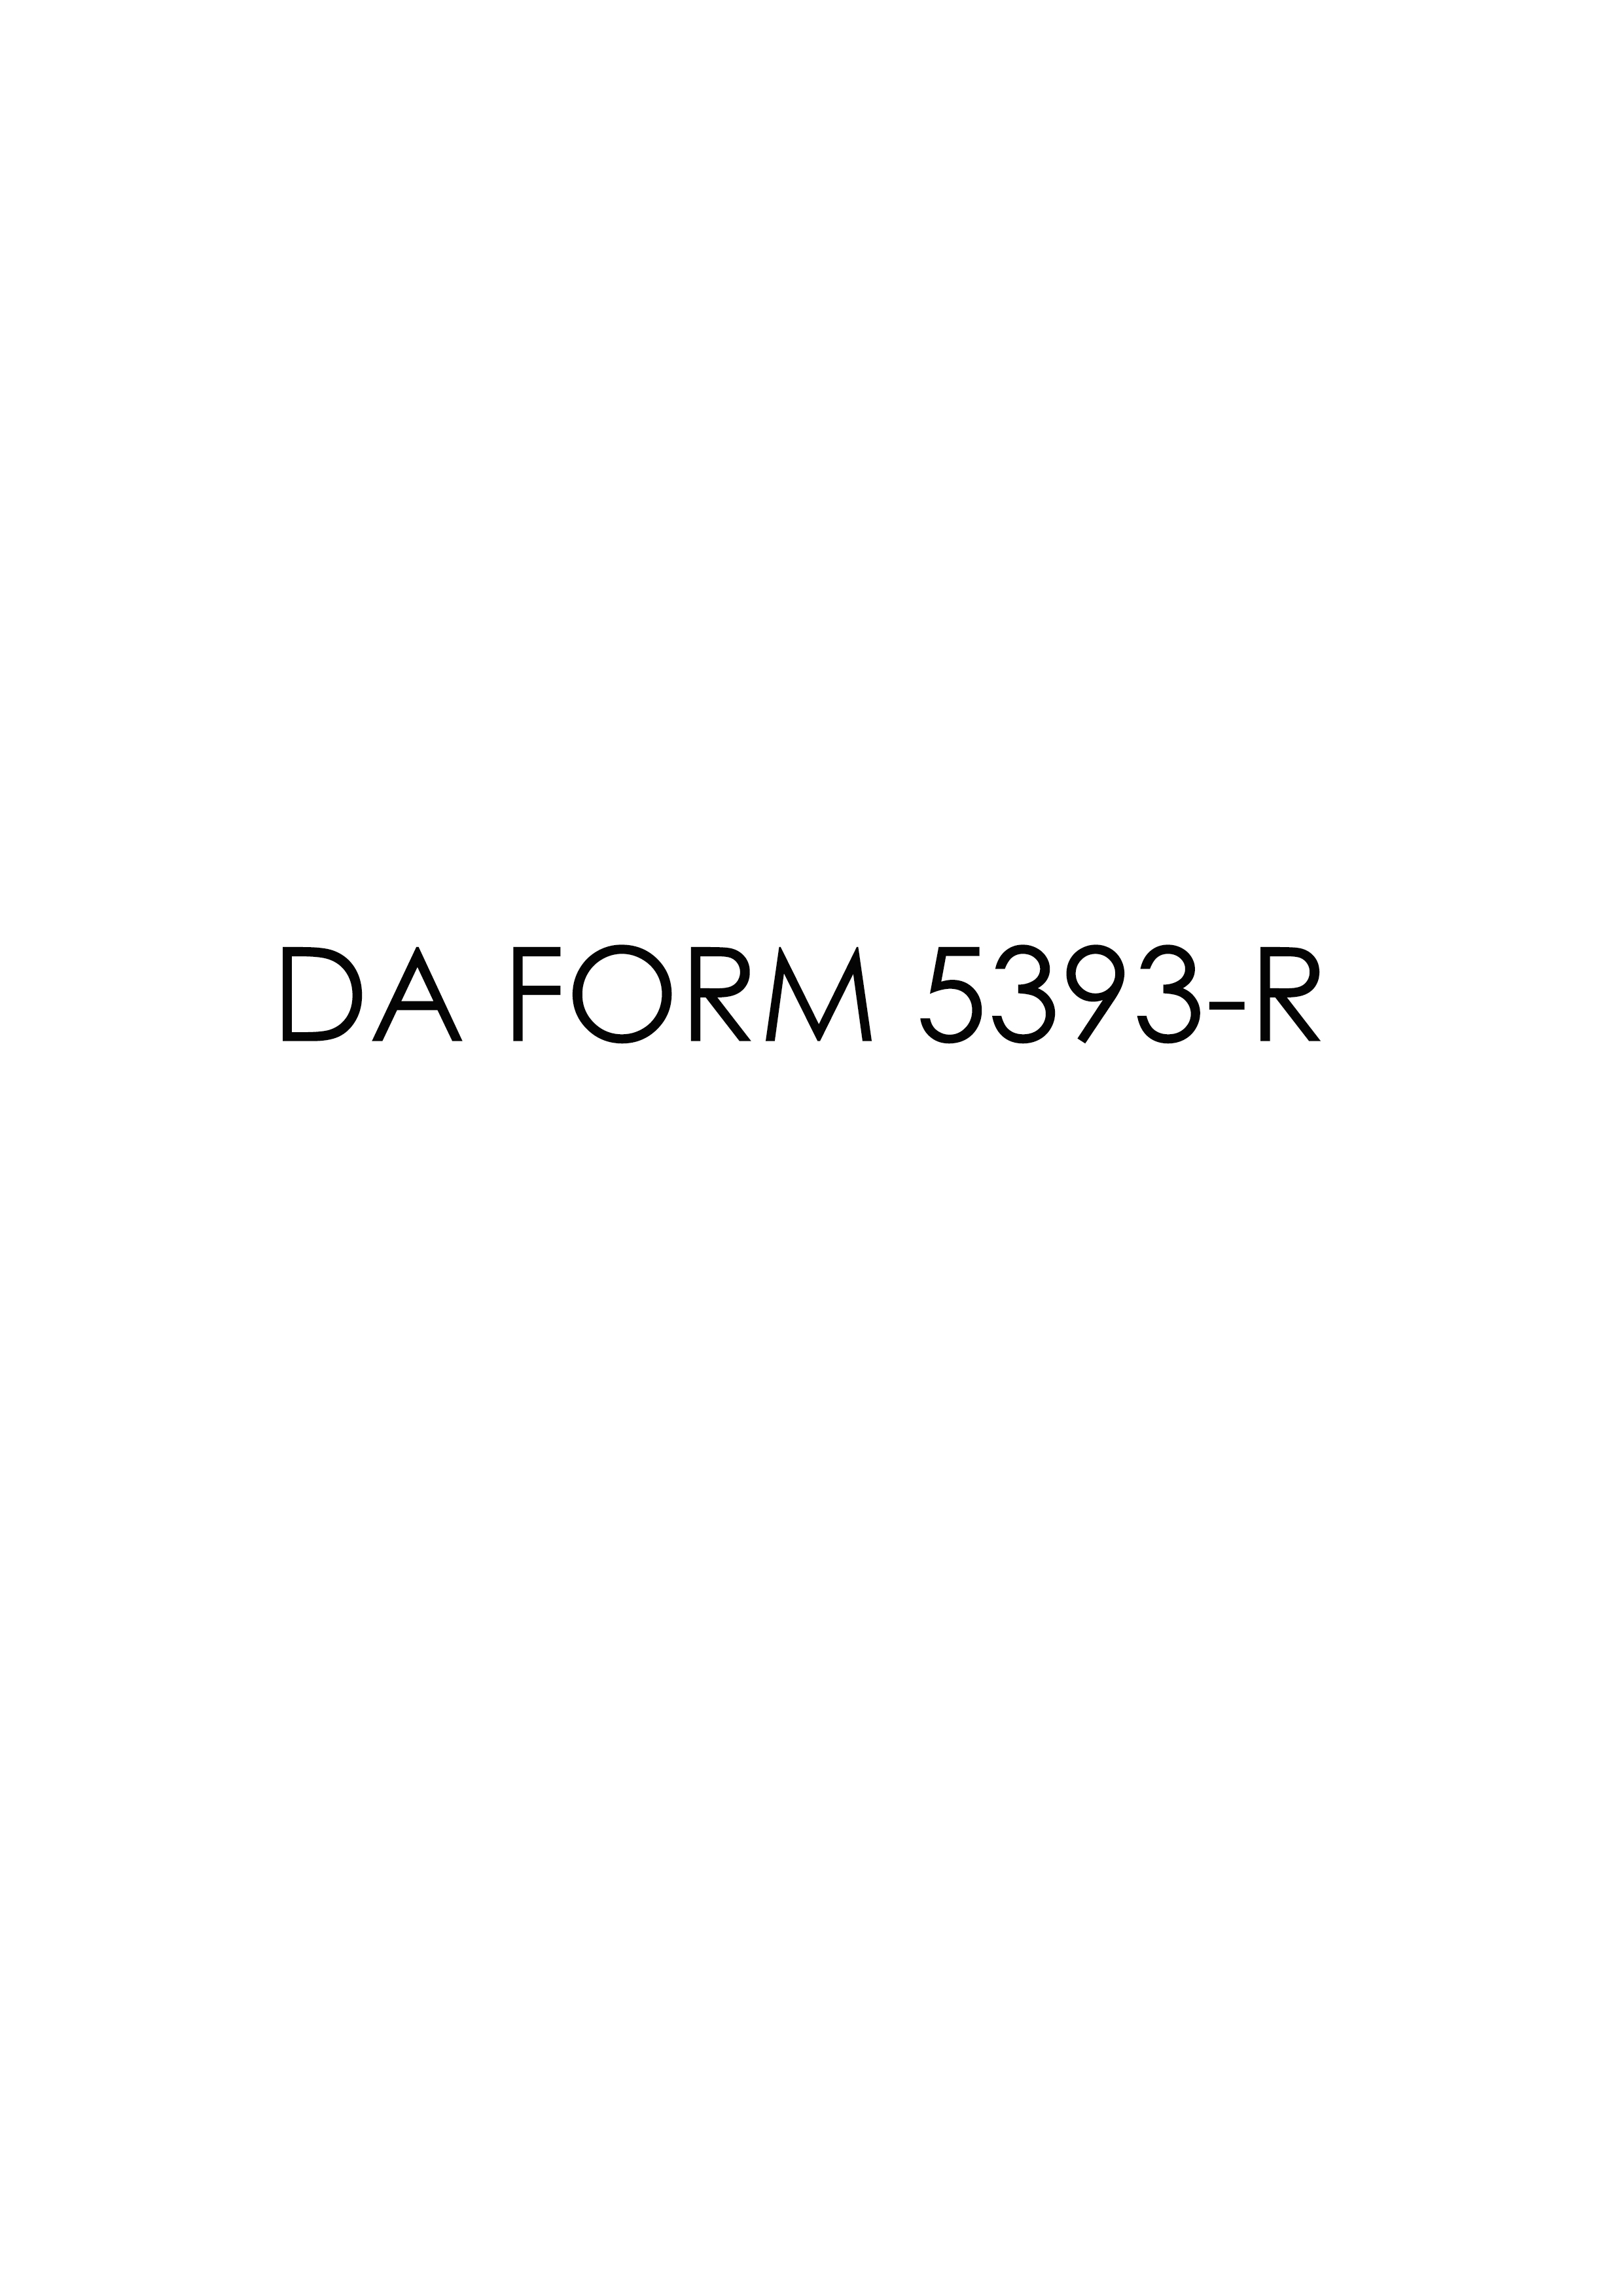 da Form 5393-R fillable